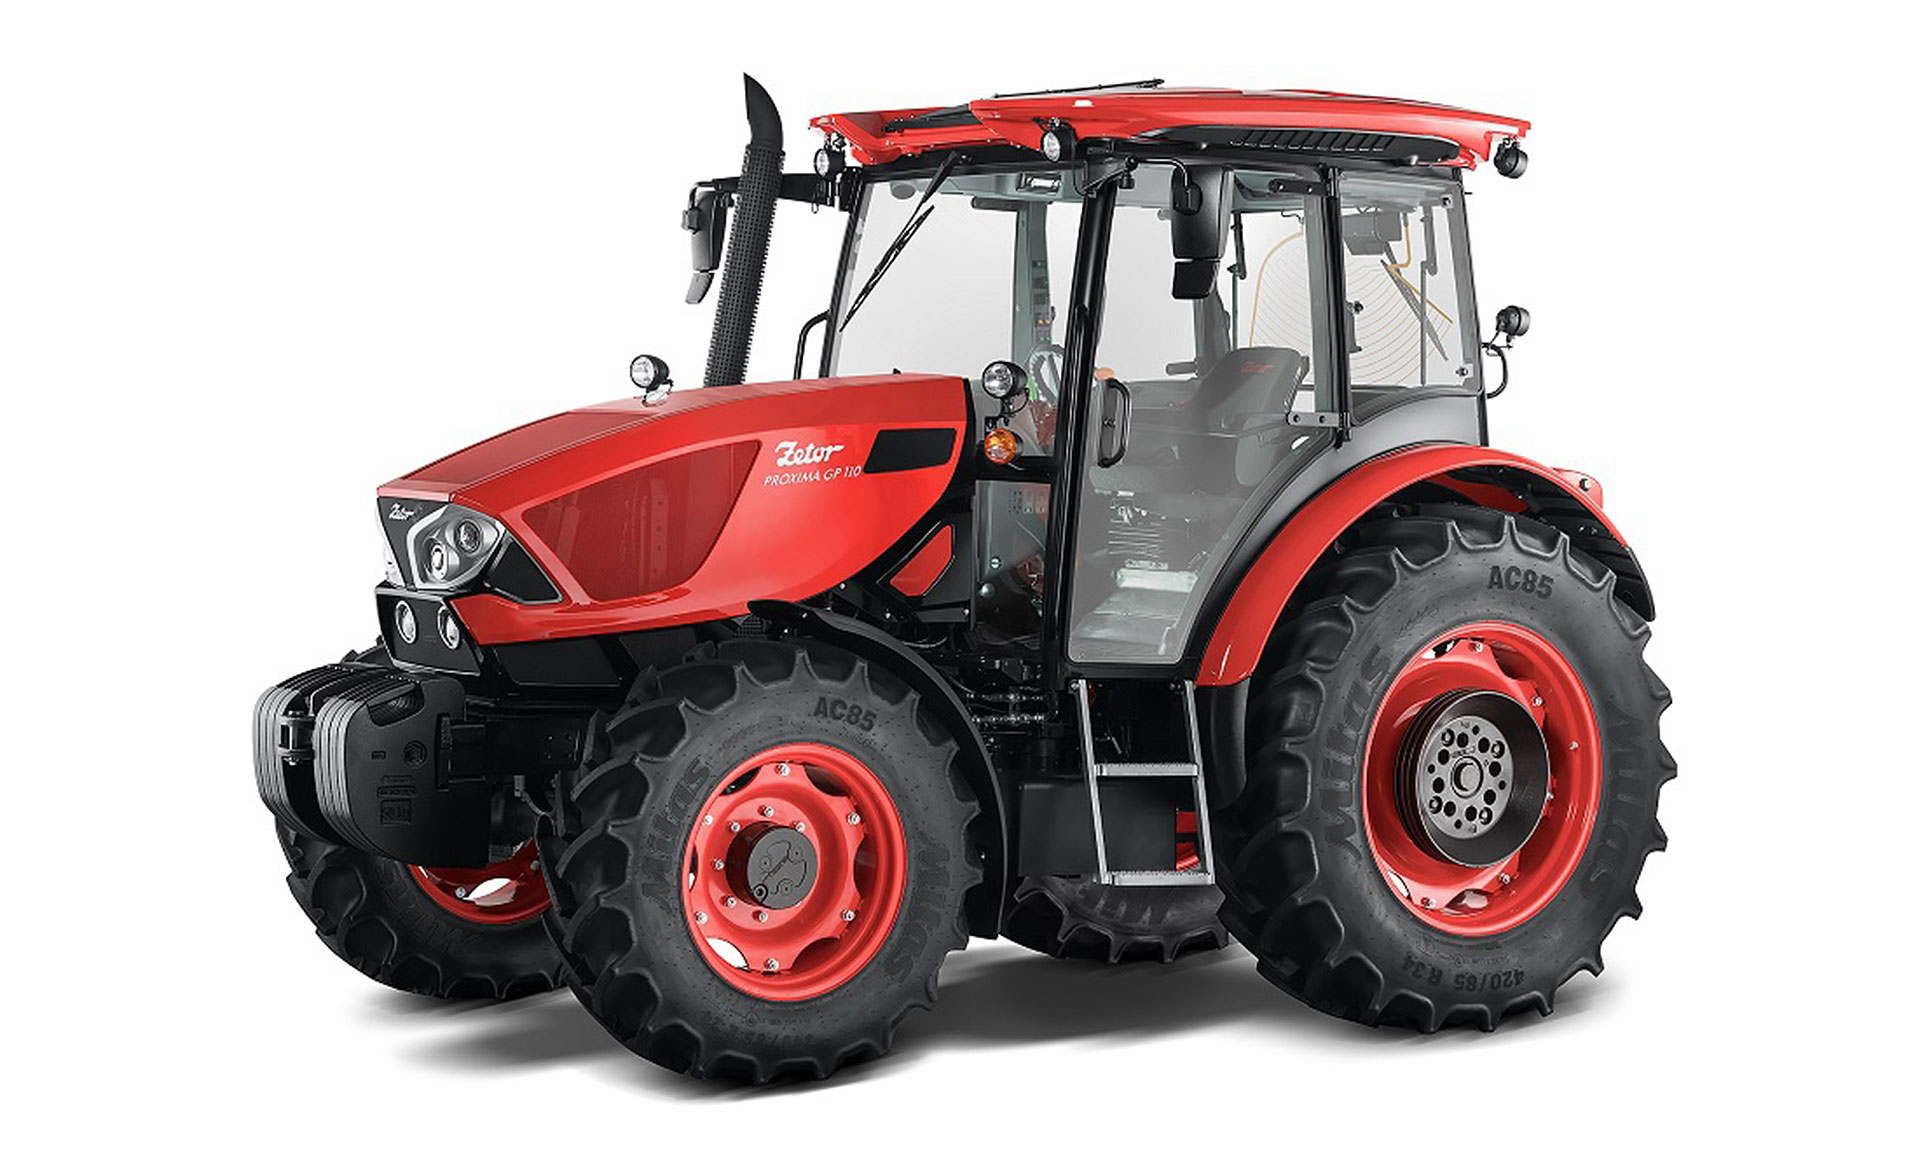 Zetor představil traktor Proxima s novým designem od studia Pininfarina